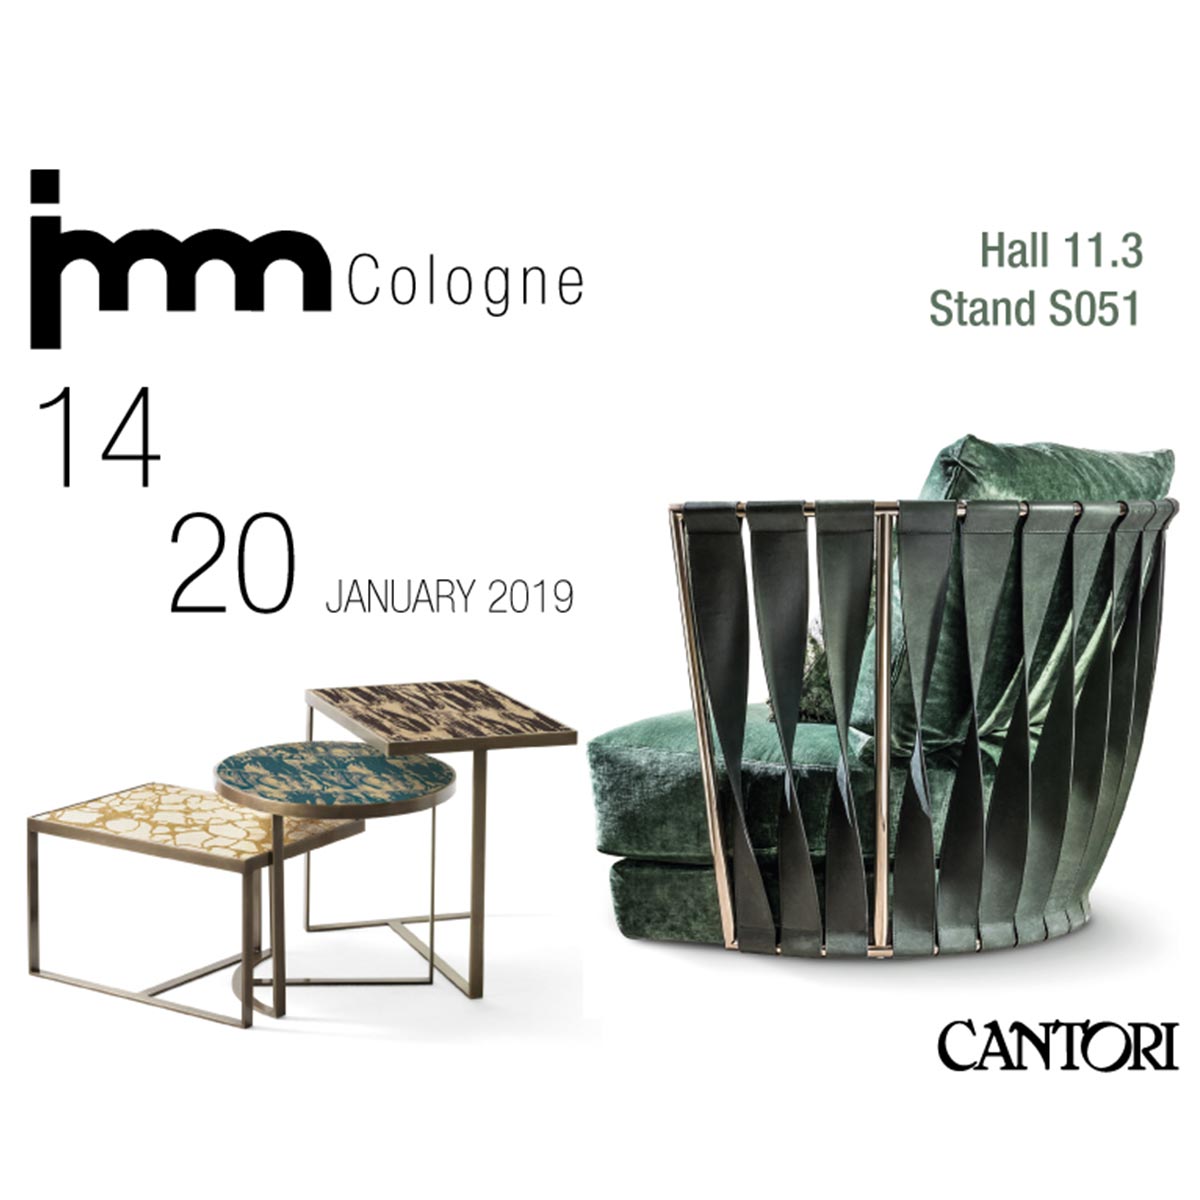 11/12/2018 Cantori at Imm Cologne 2019 - Cantori